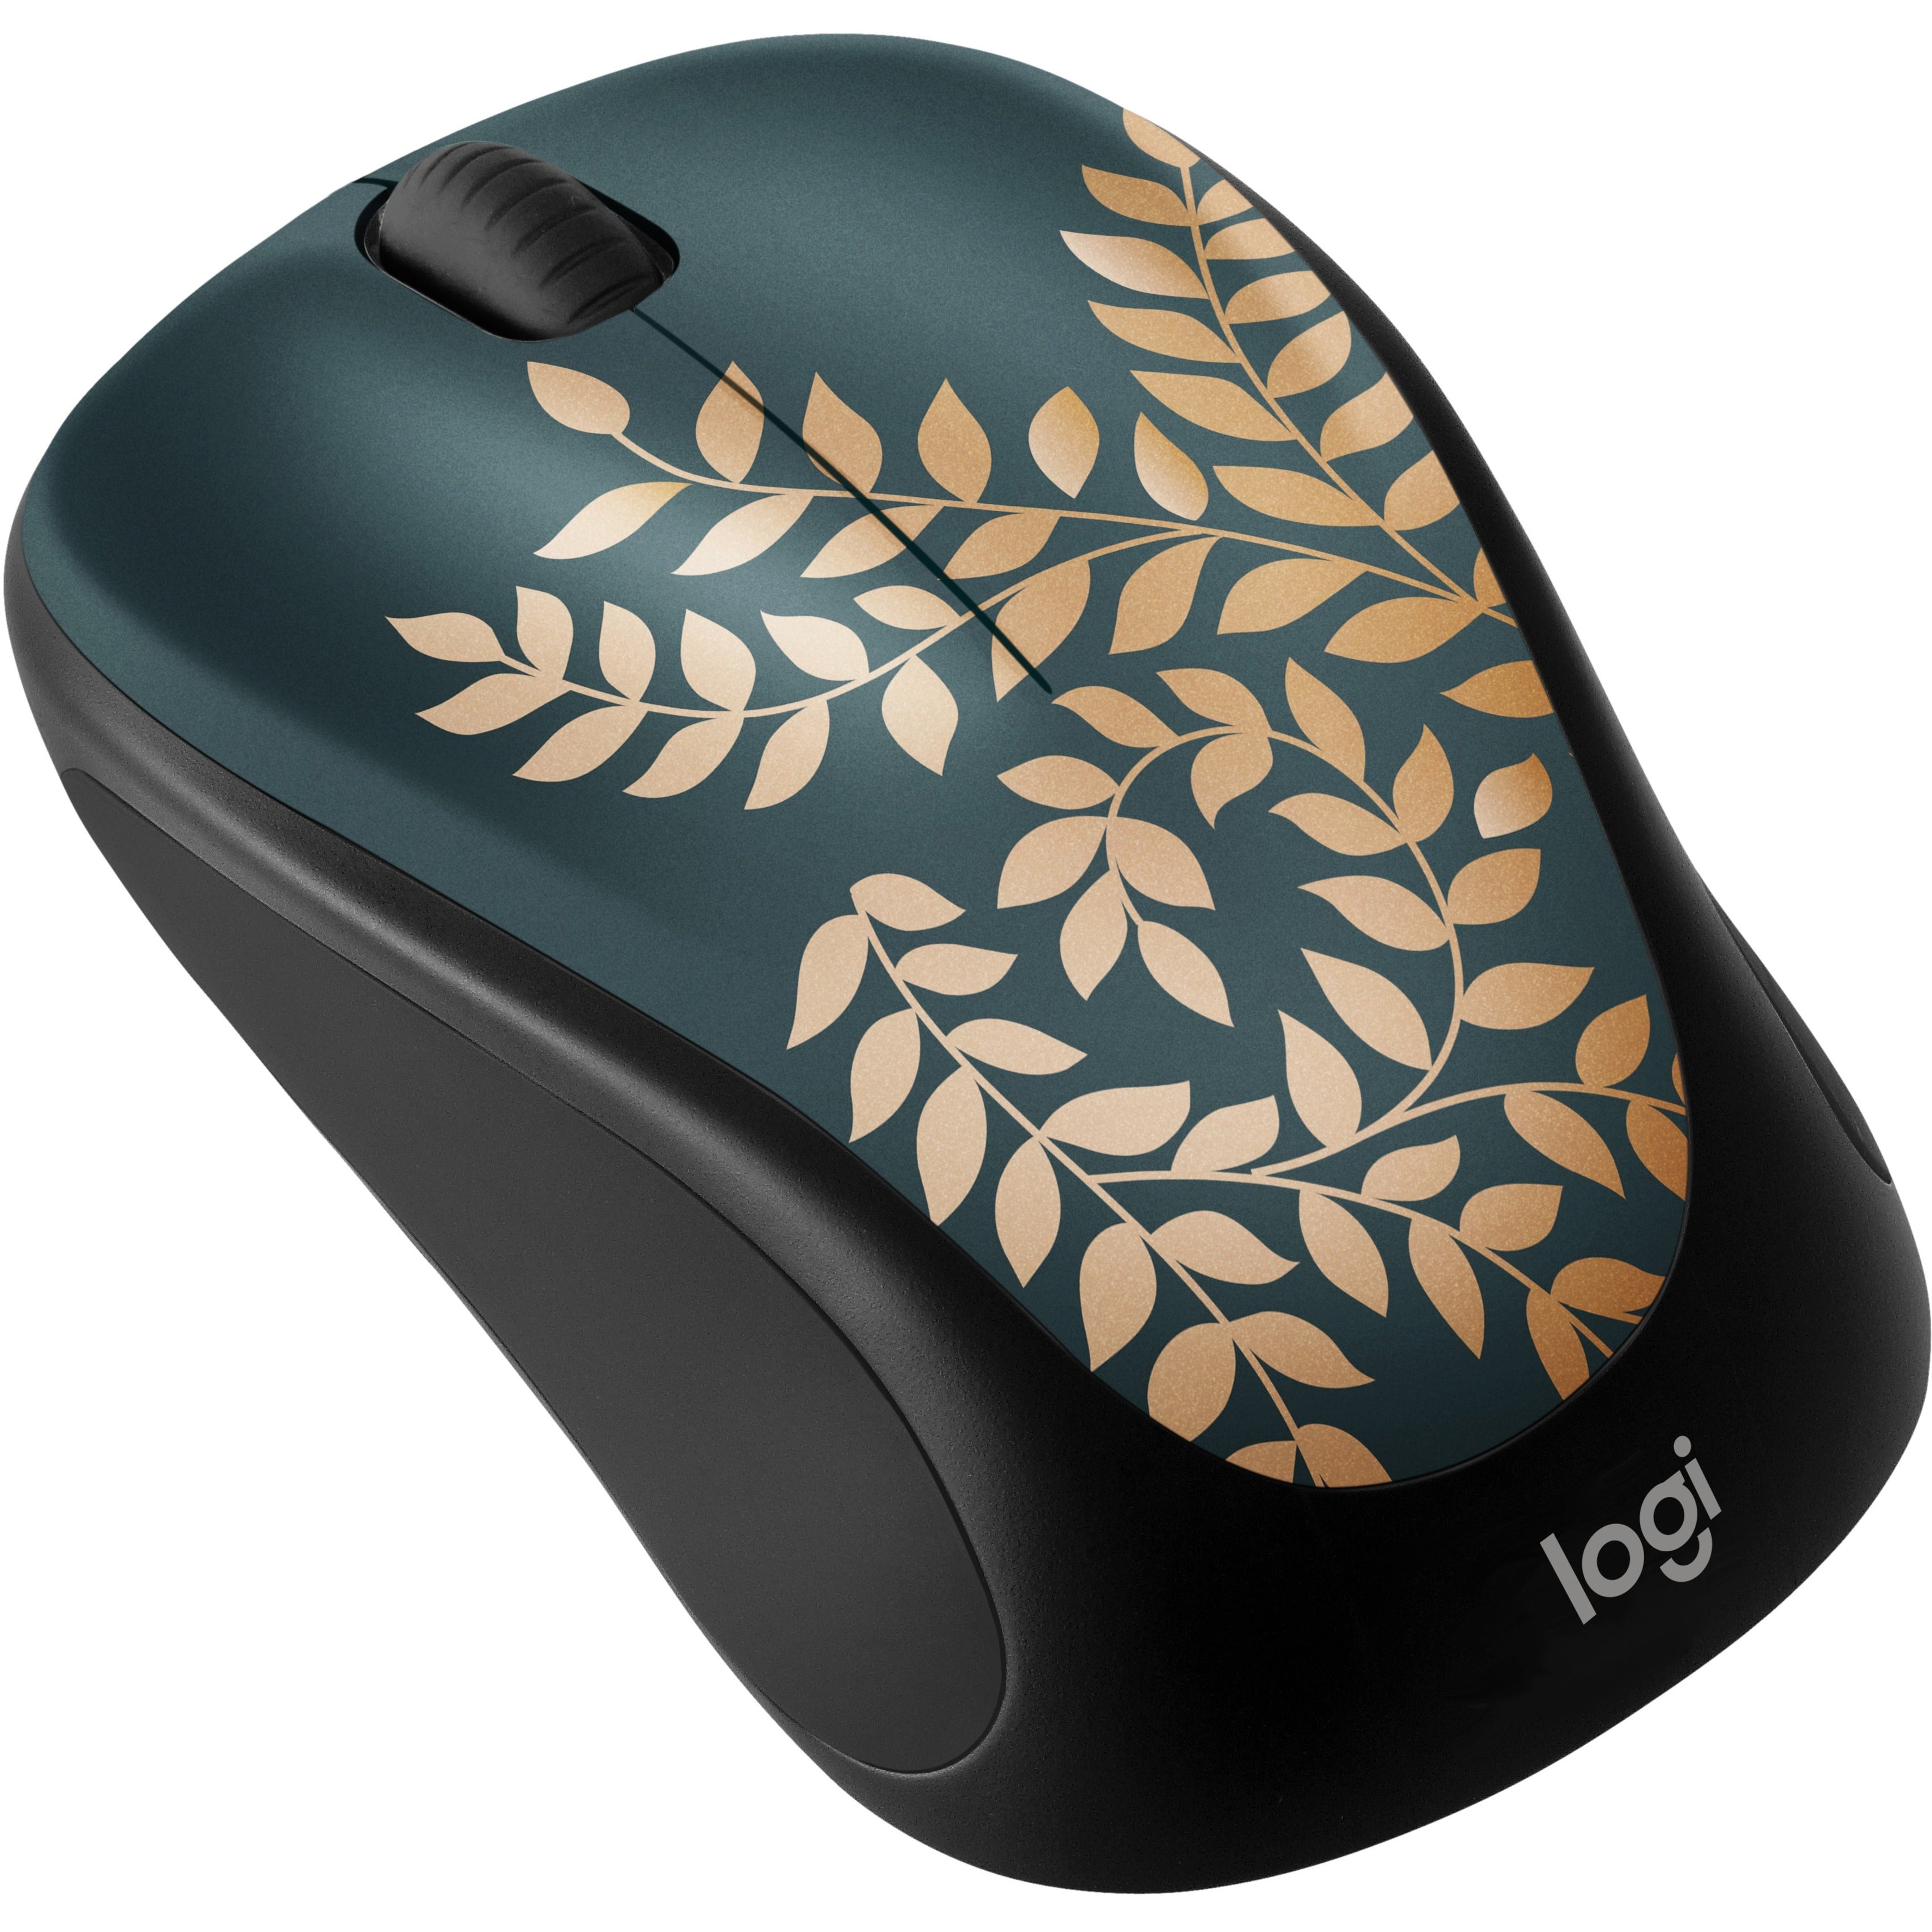 Logitech Design Collection Wireless Mouse - Golden Garden [Discontinued]